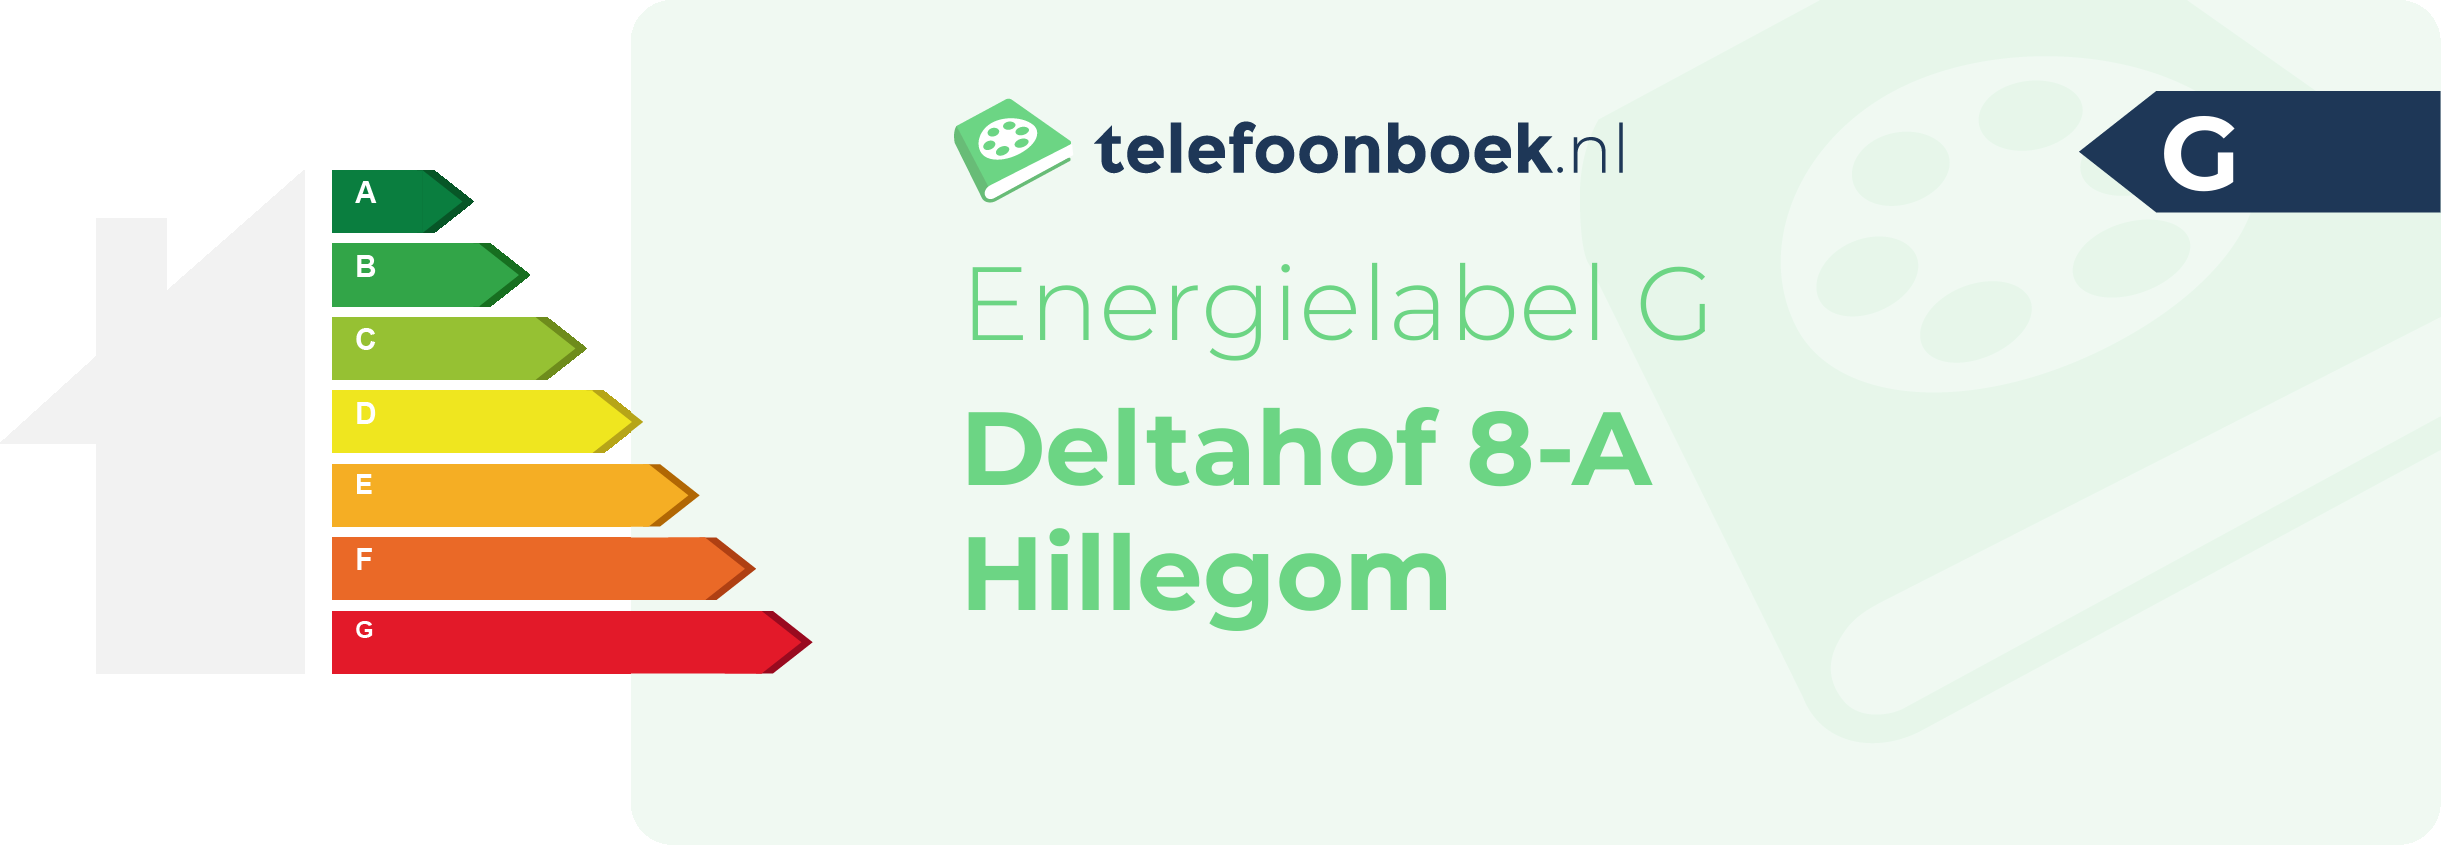 Energielabel Deltahof 8-A Hillegom